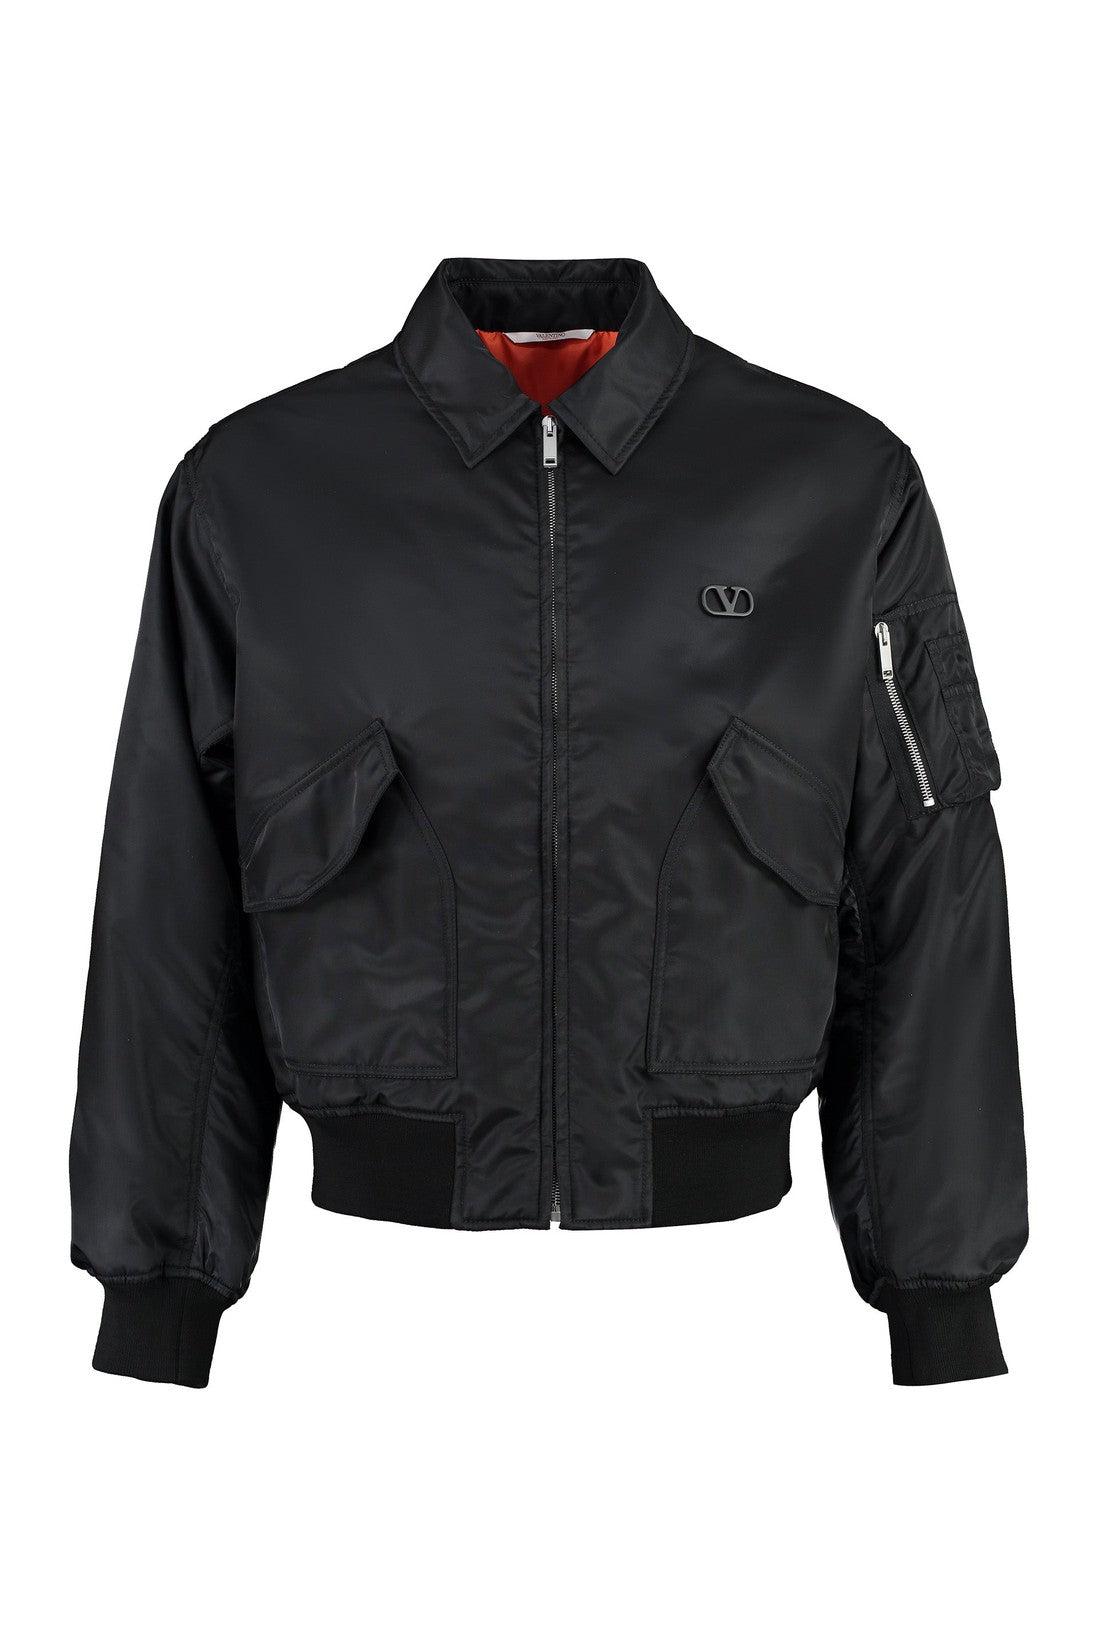 Valentino-OUTLET-SALE-Nylon bomber jacket-ARCHIVIST